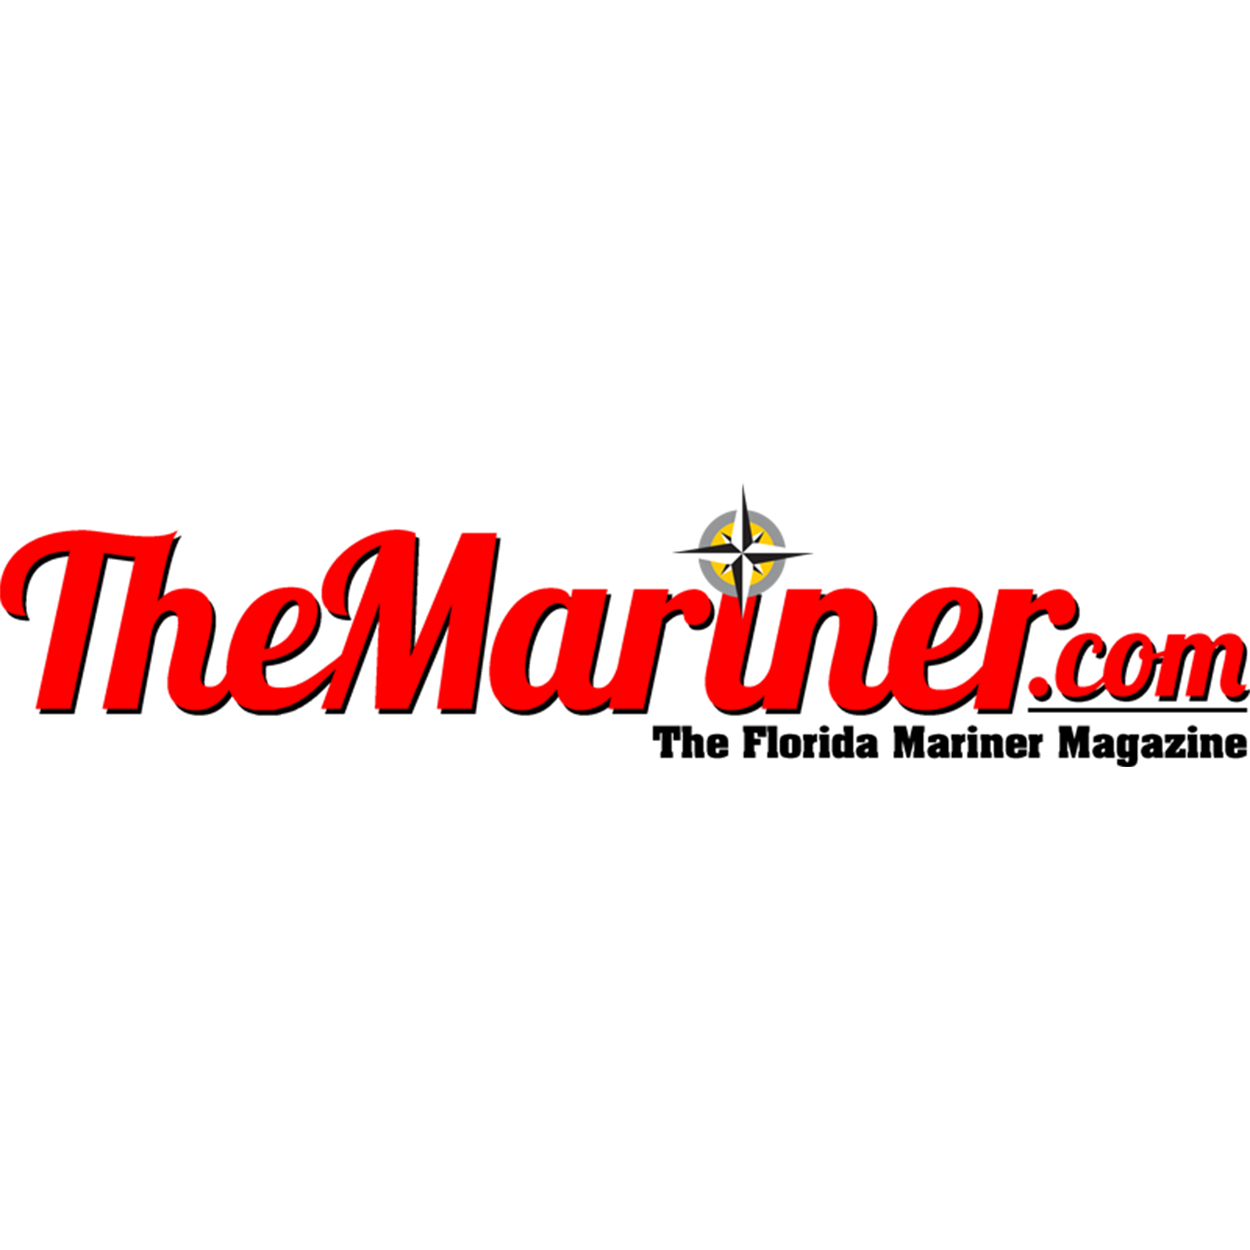 The Florida Mariner Magazine